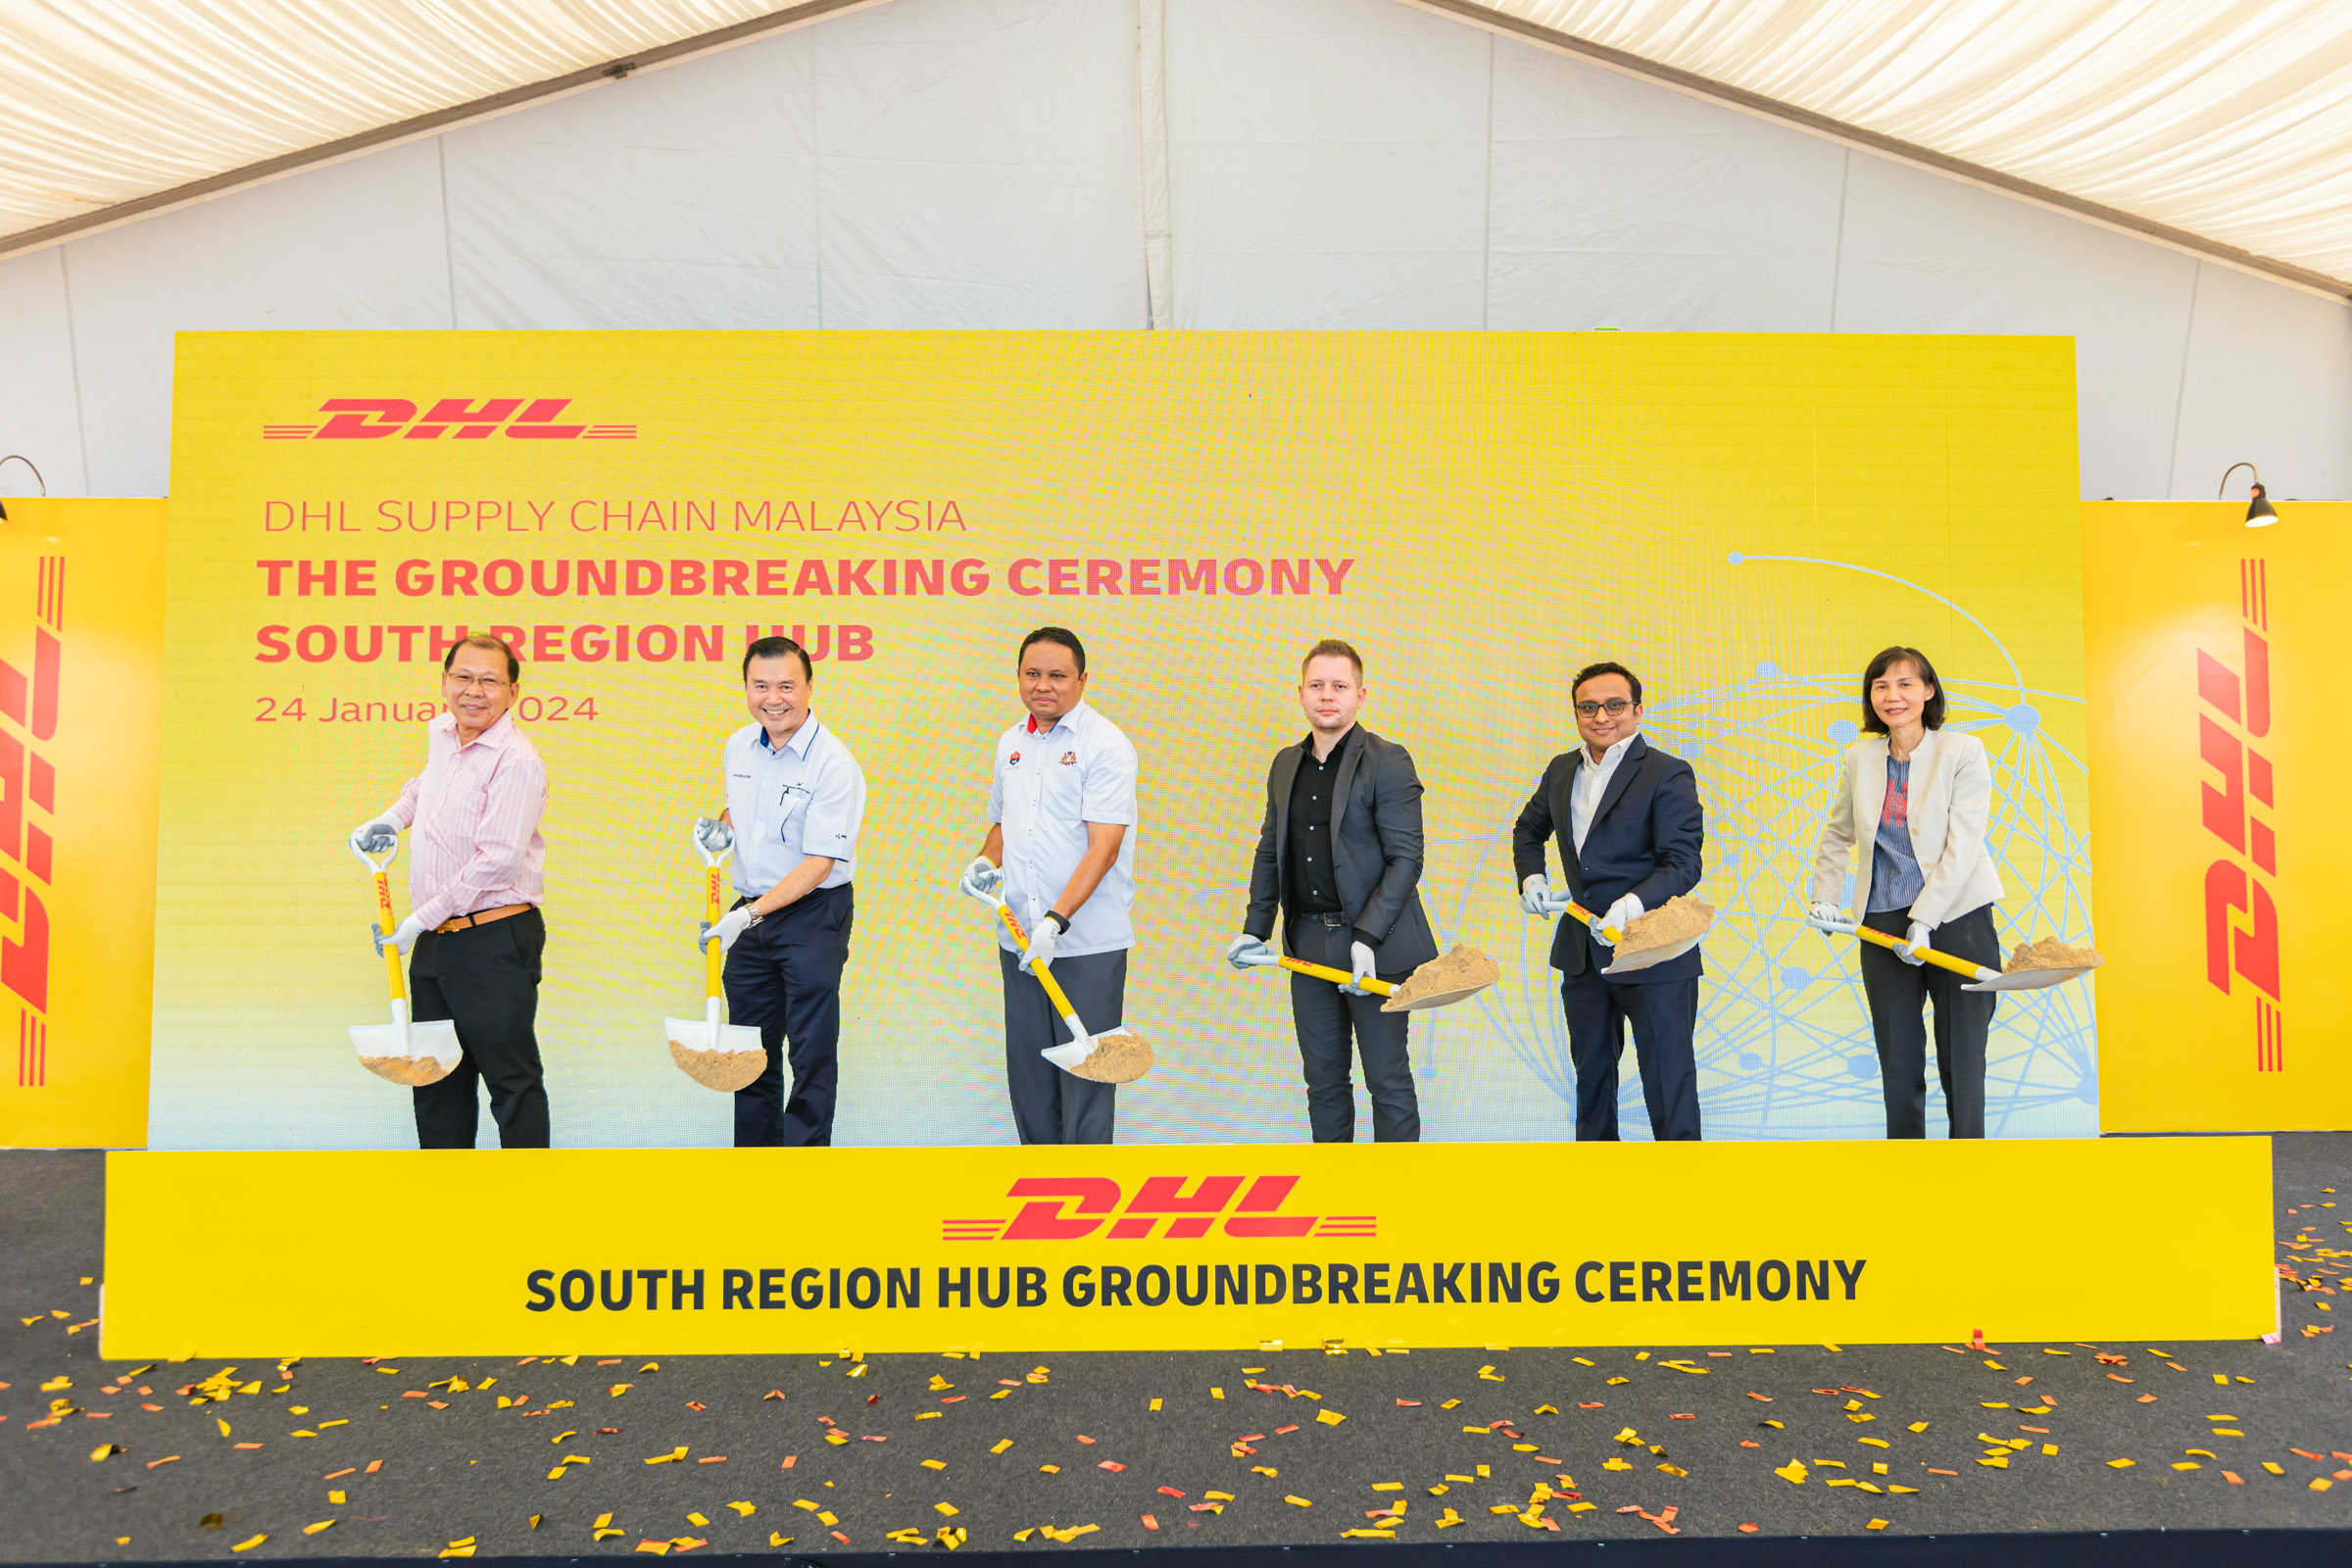 Groundbreaking ceremony of South Region Hub